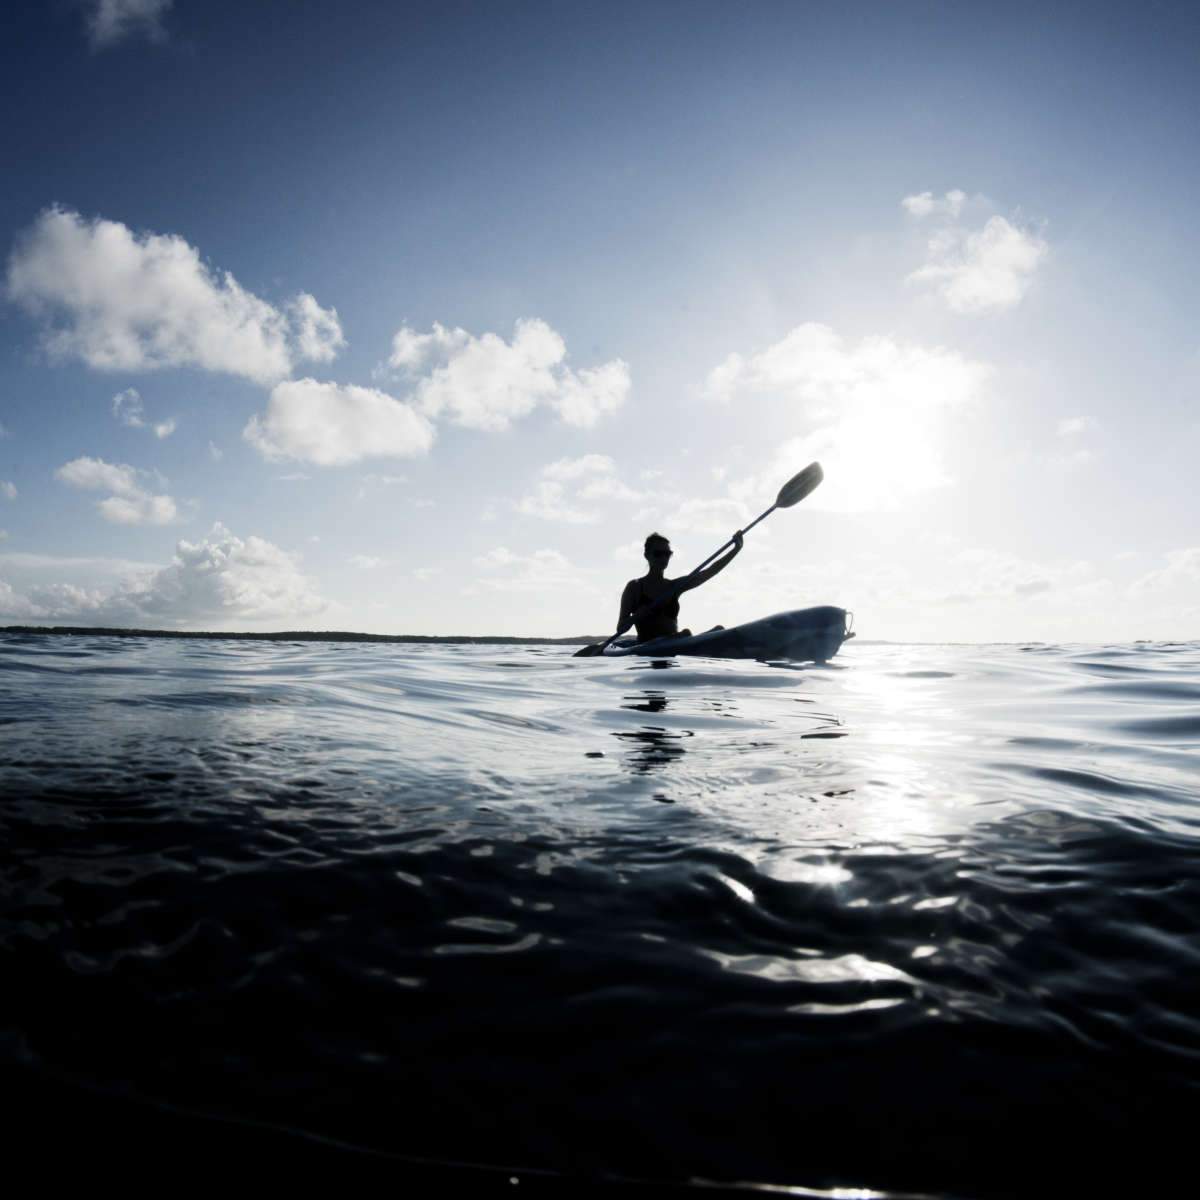 Kayaking And Canoeing